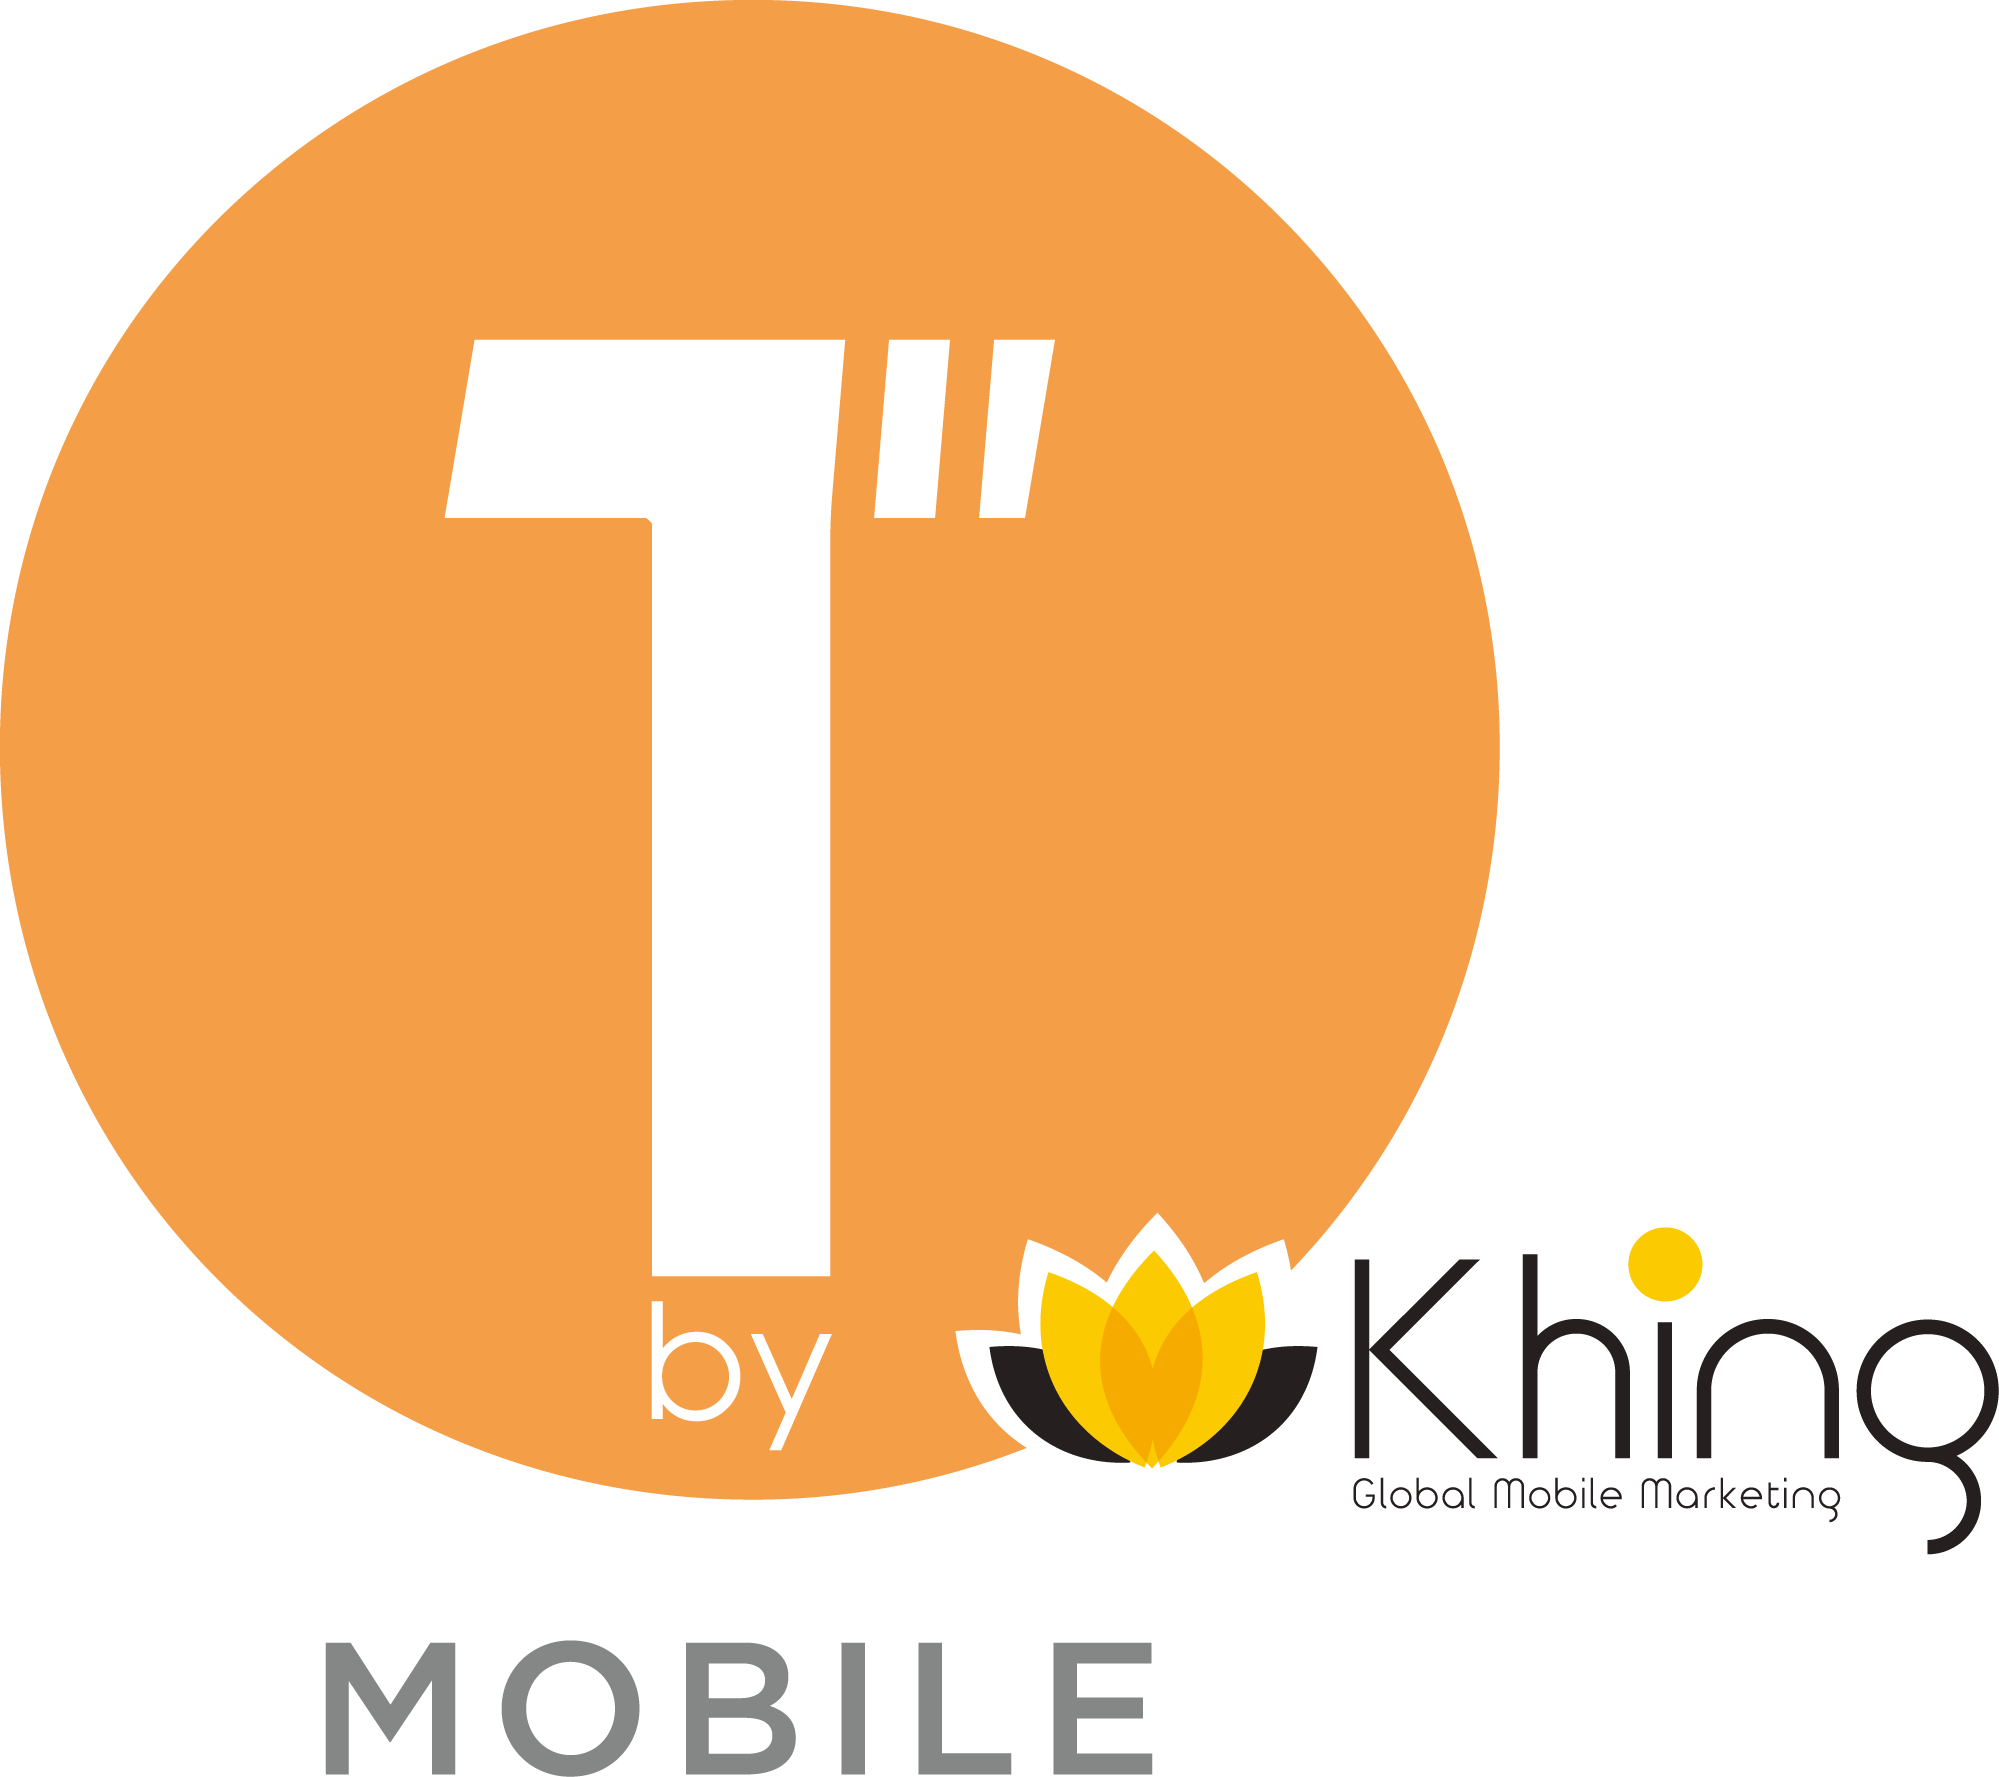 TimeOne Mobile (Khing)